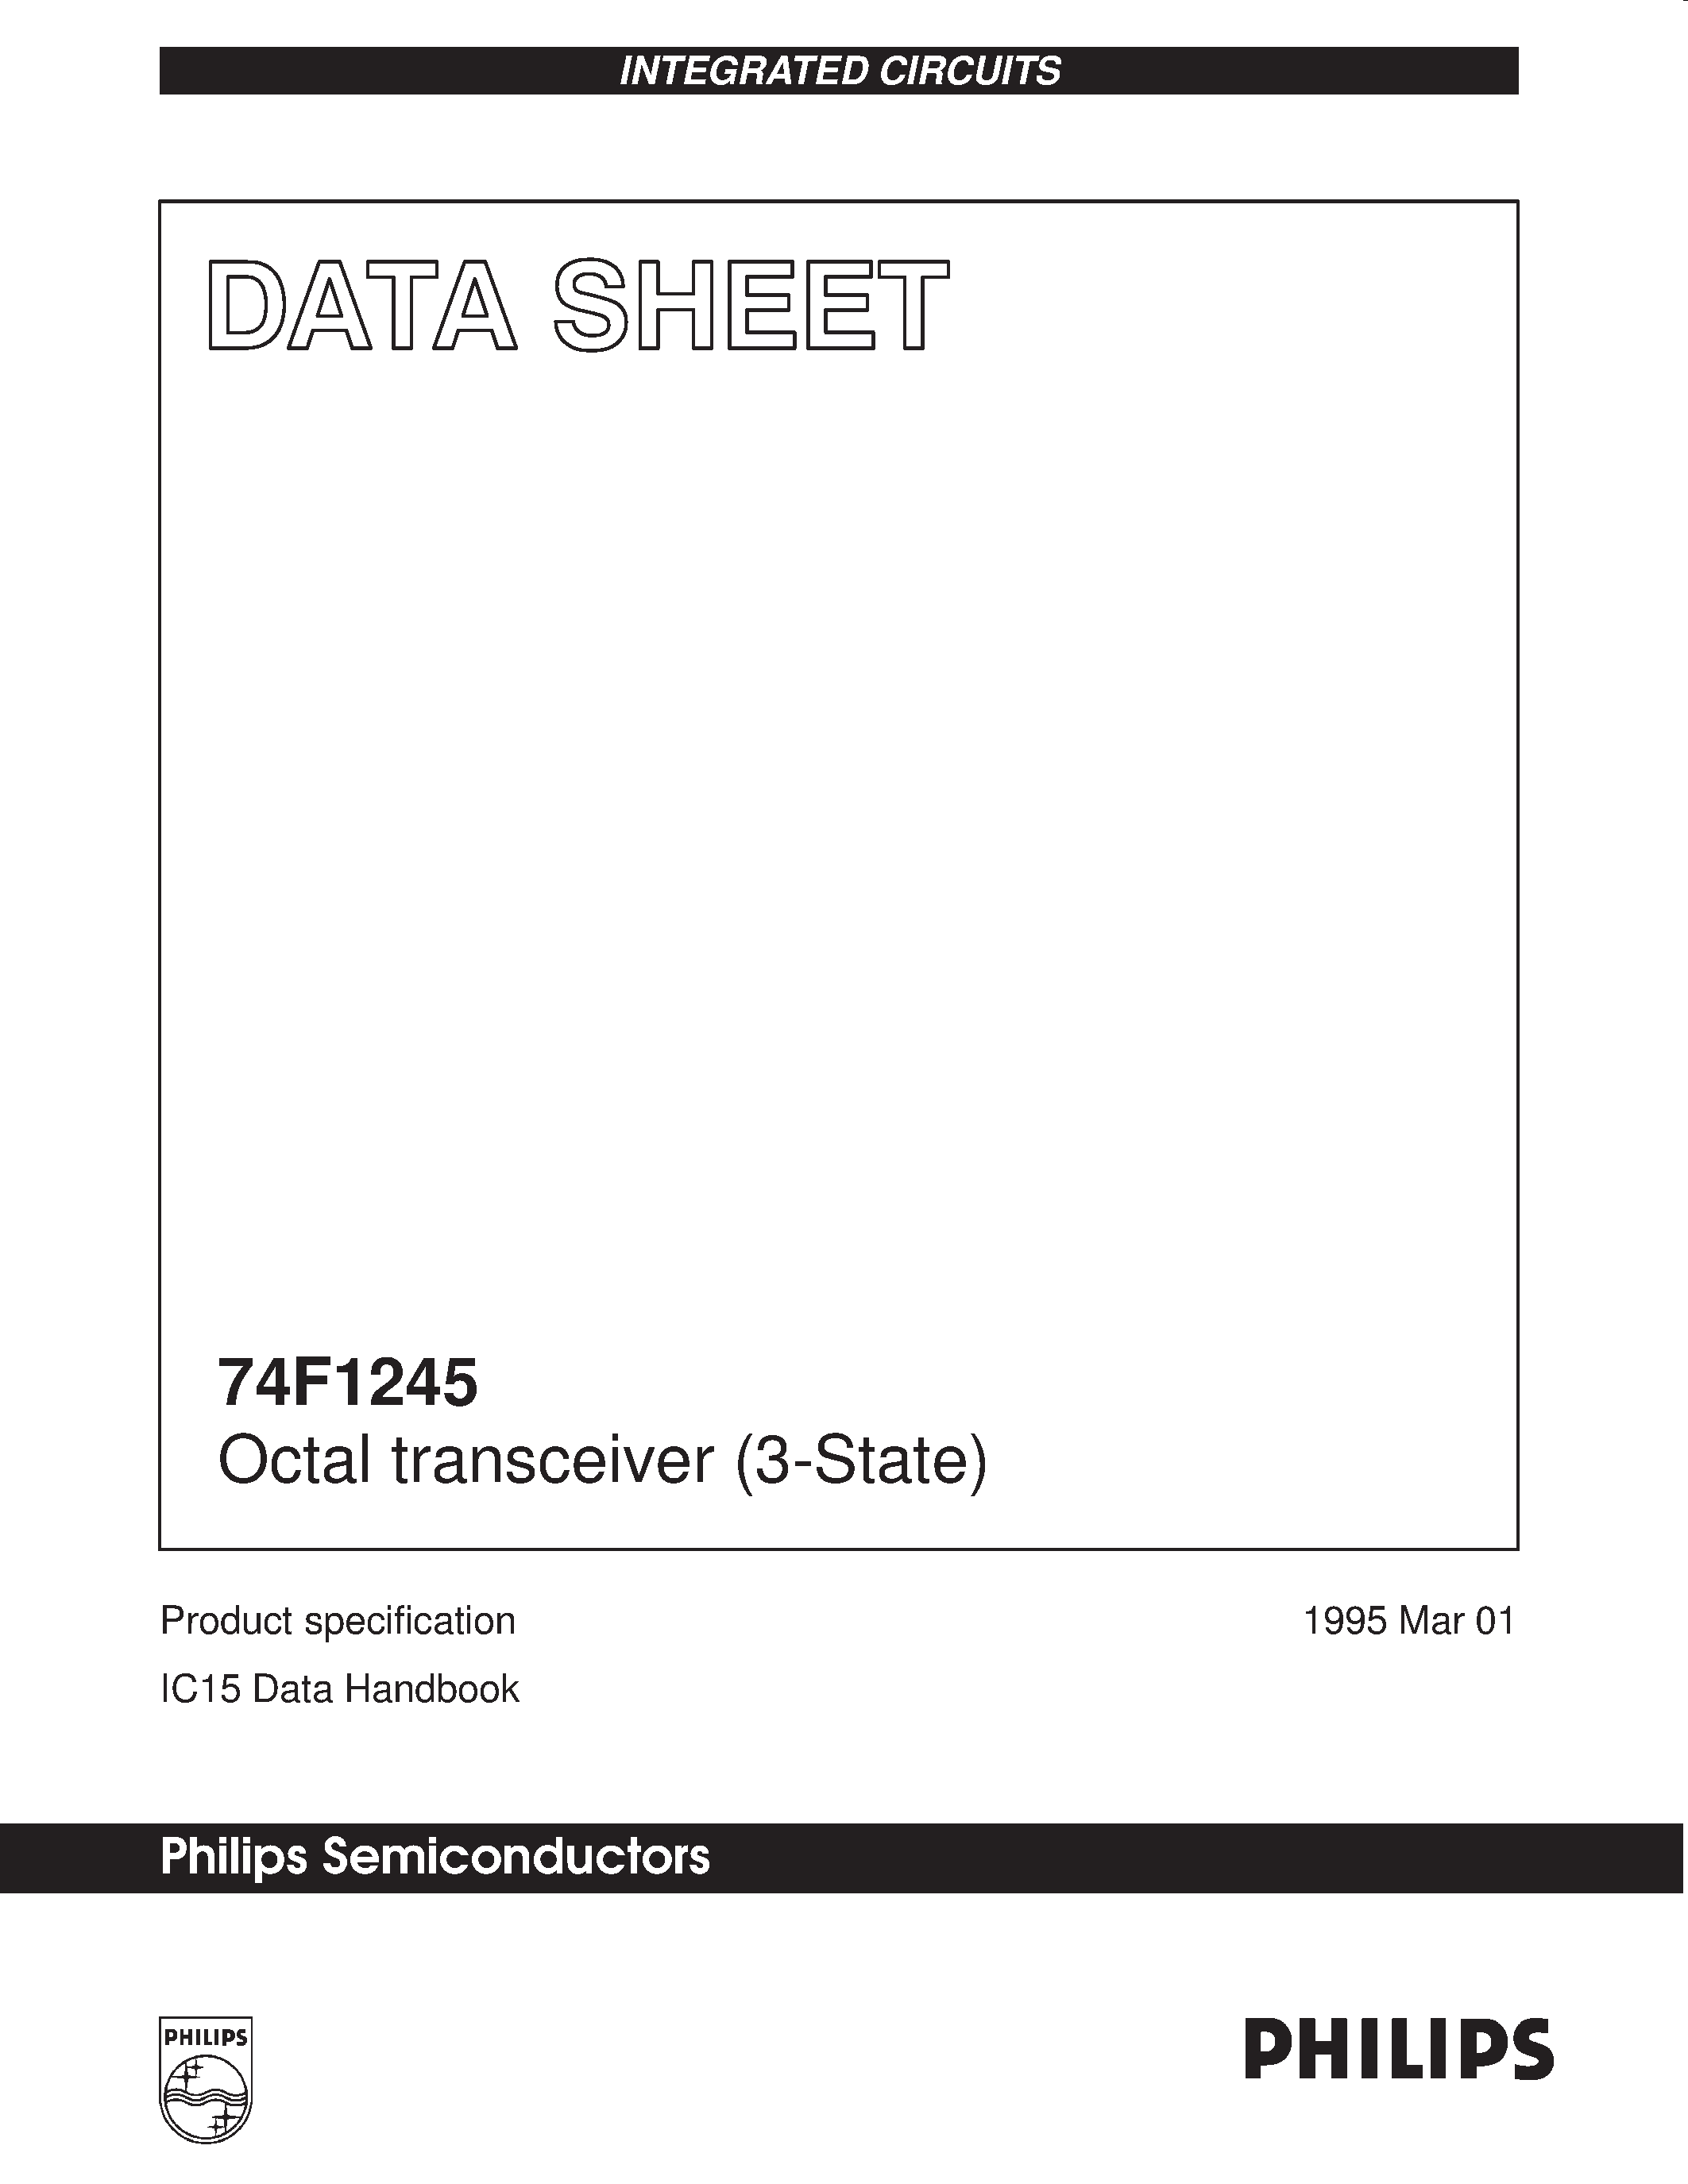 Даташит 74F1245 - Octal transceiver 3-State страница 1